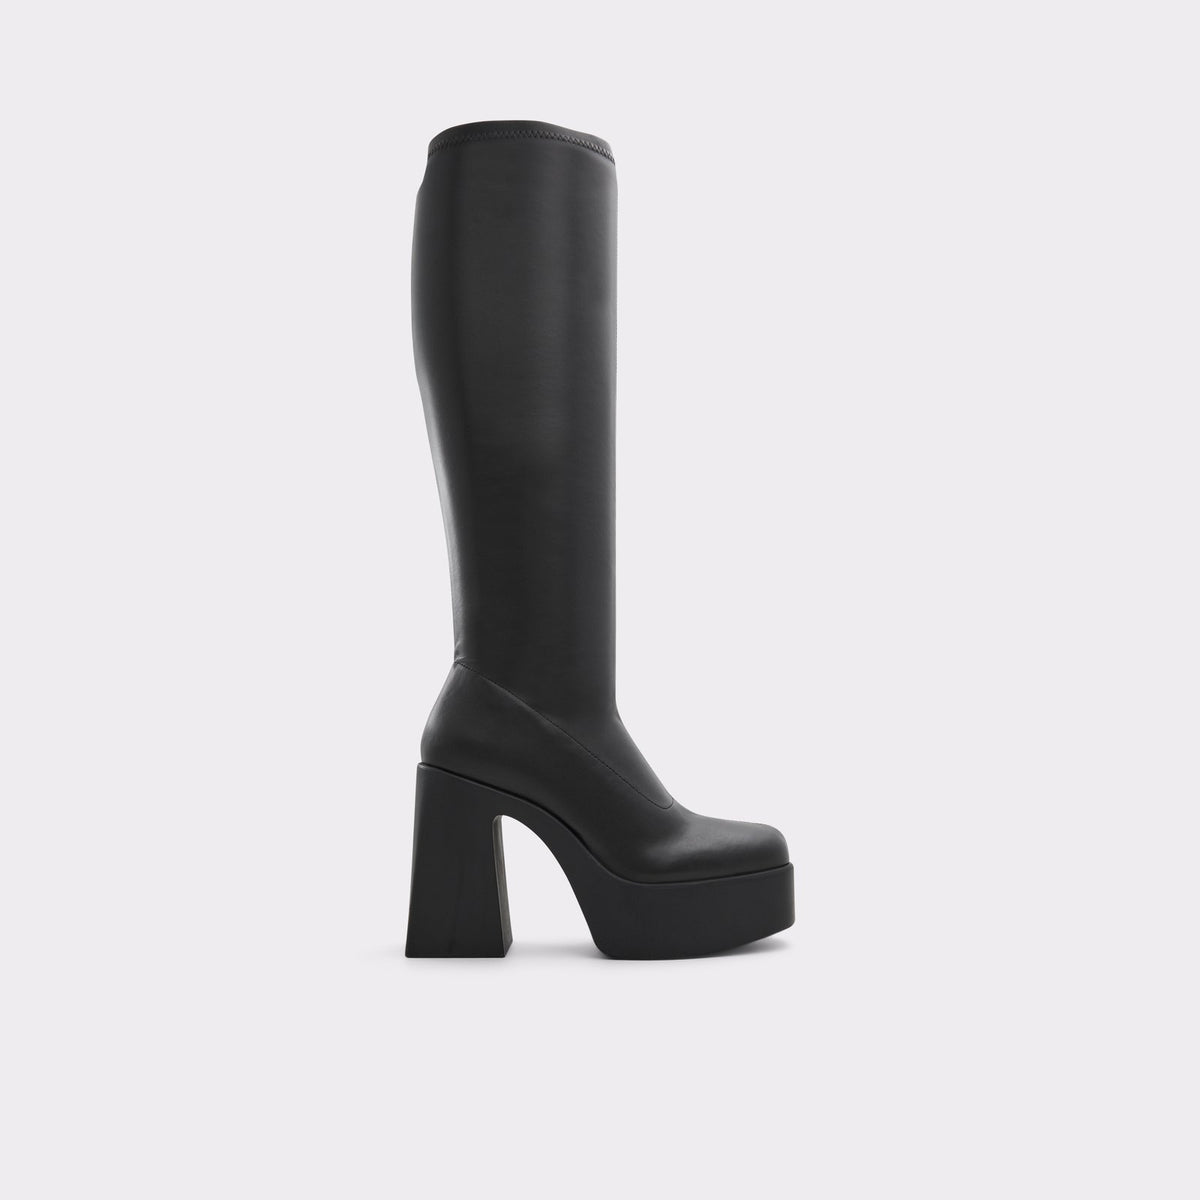 Aldo Women's Knee-High Boots Moulin (Black) Shoes